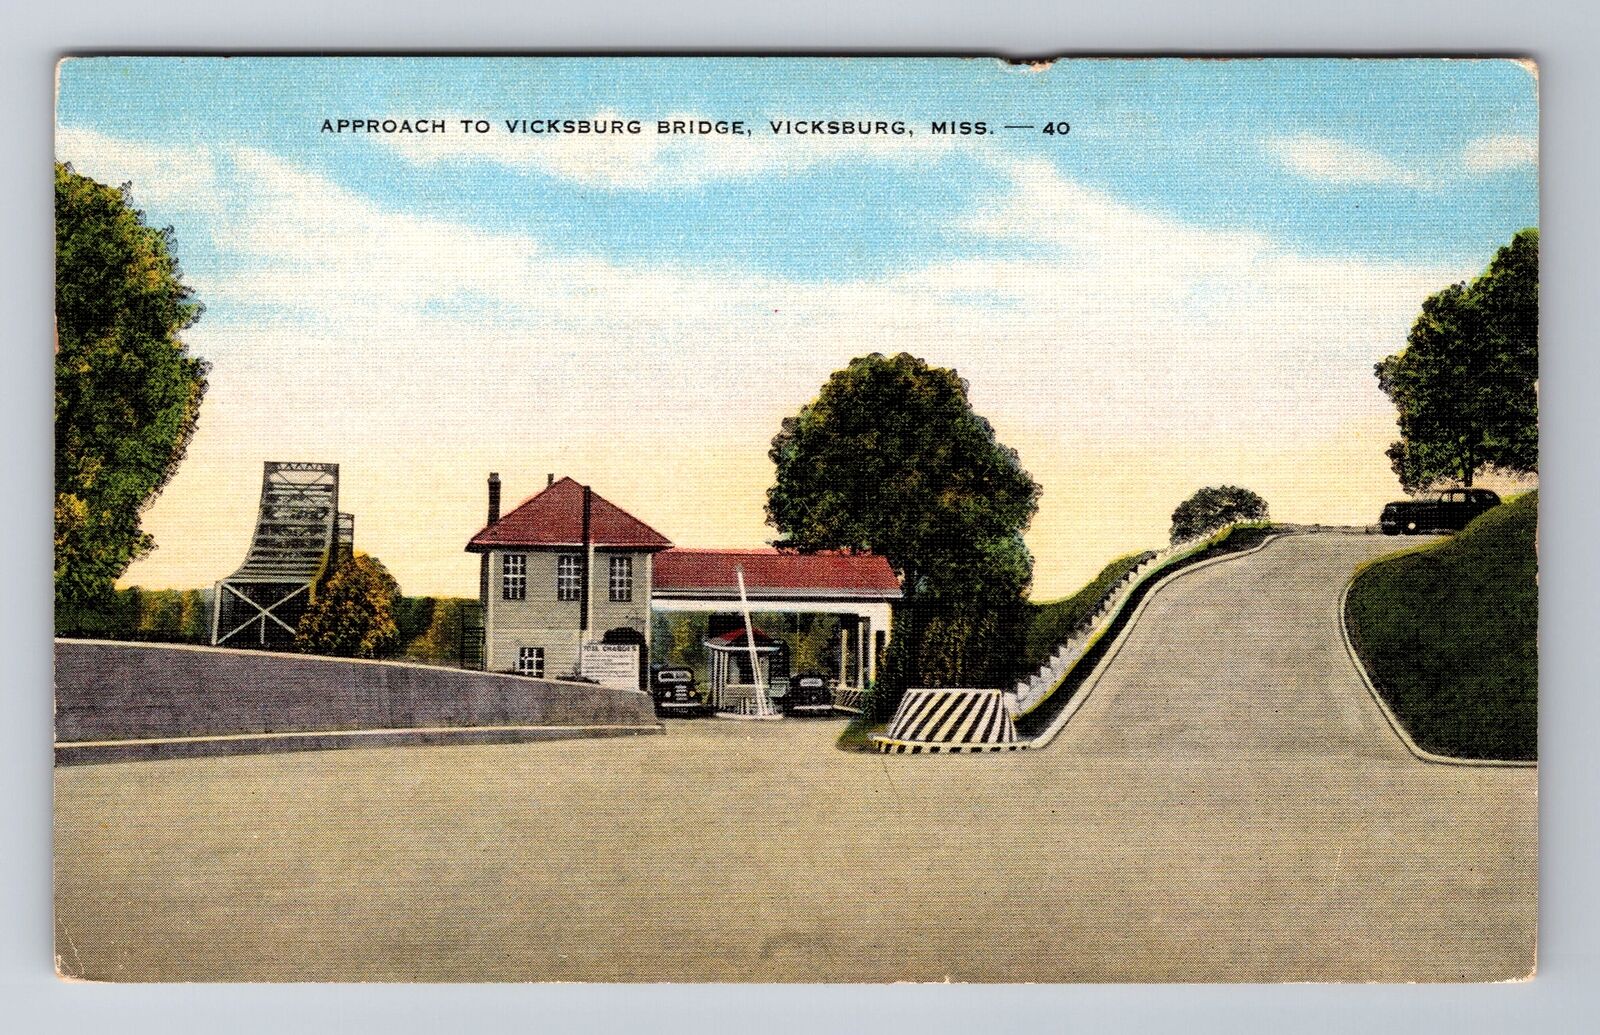 Vicksburg MS-Mississippi, Approach to Vicksburg Bridge Souvenir Vintage Postcard